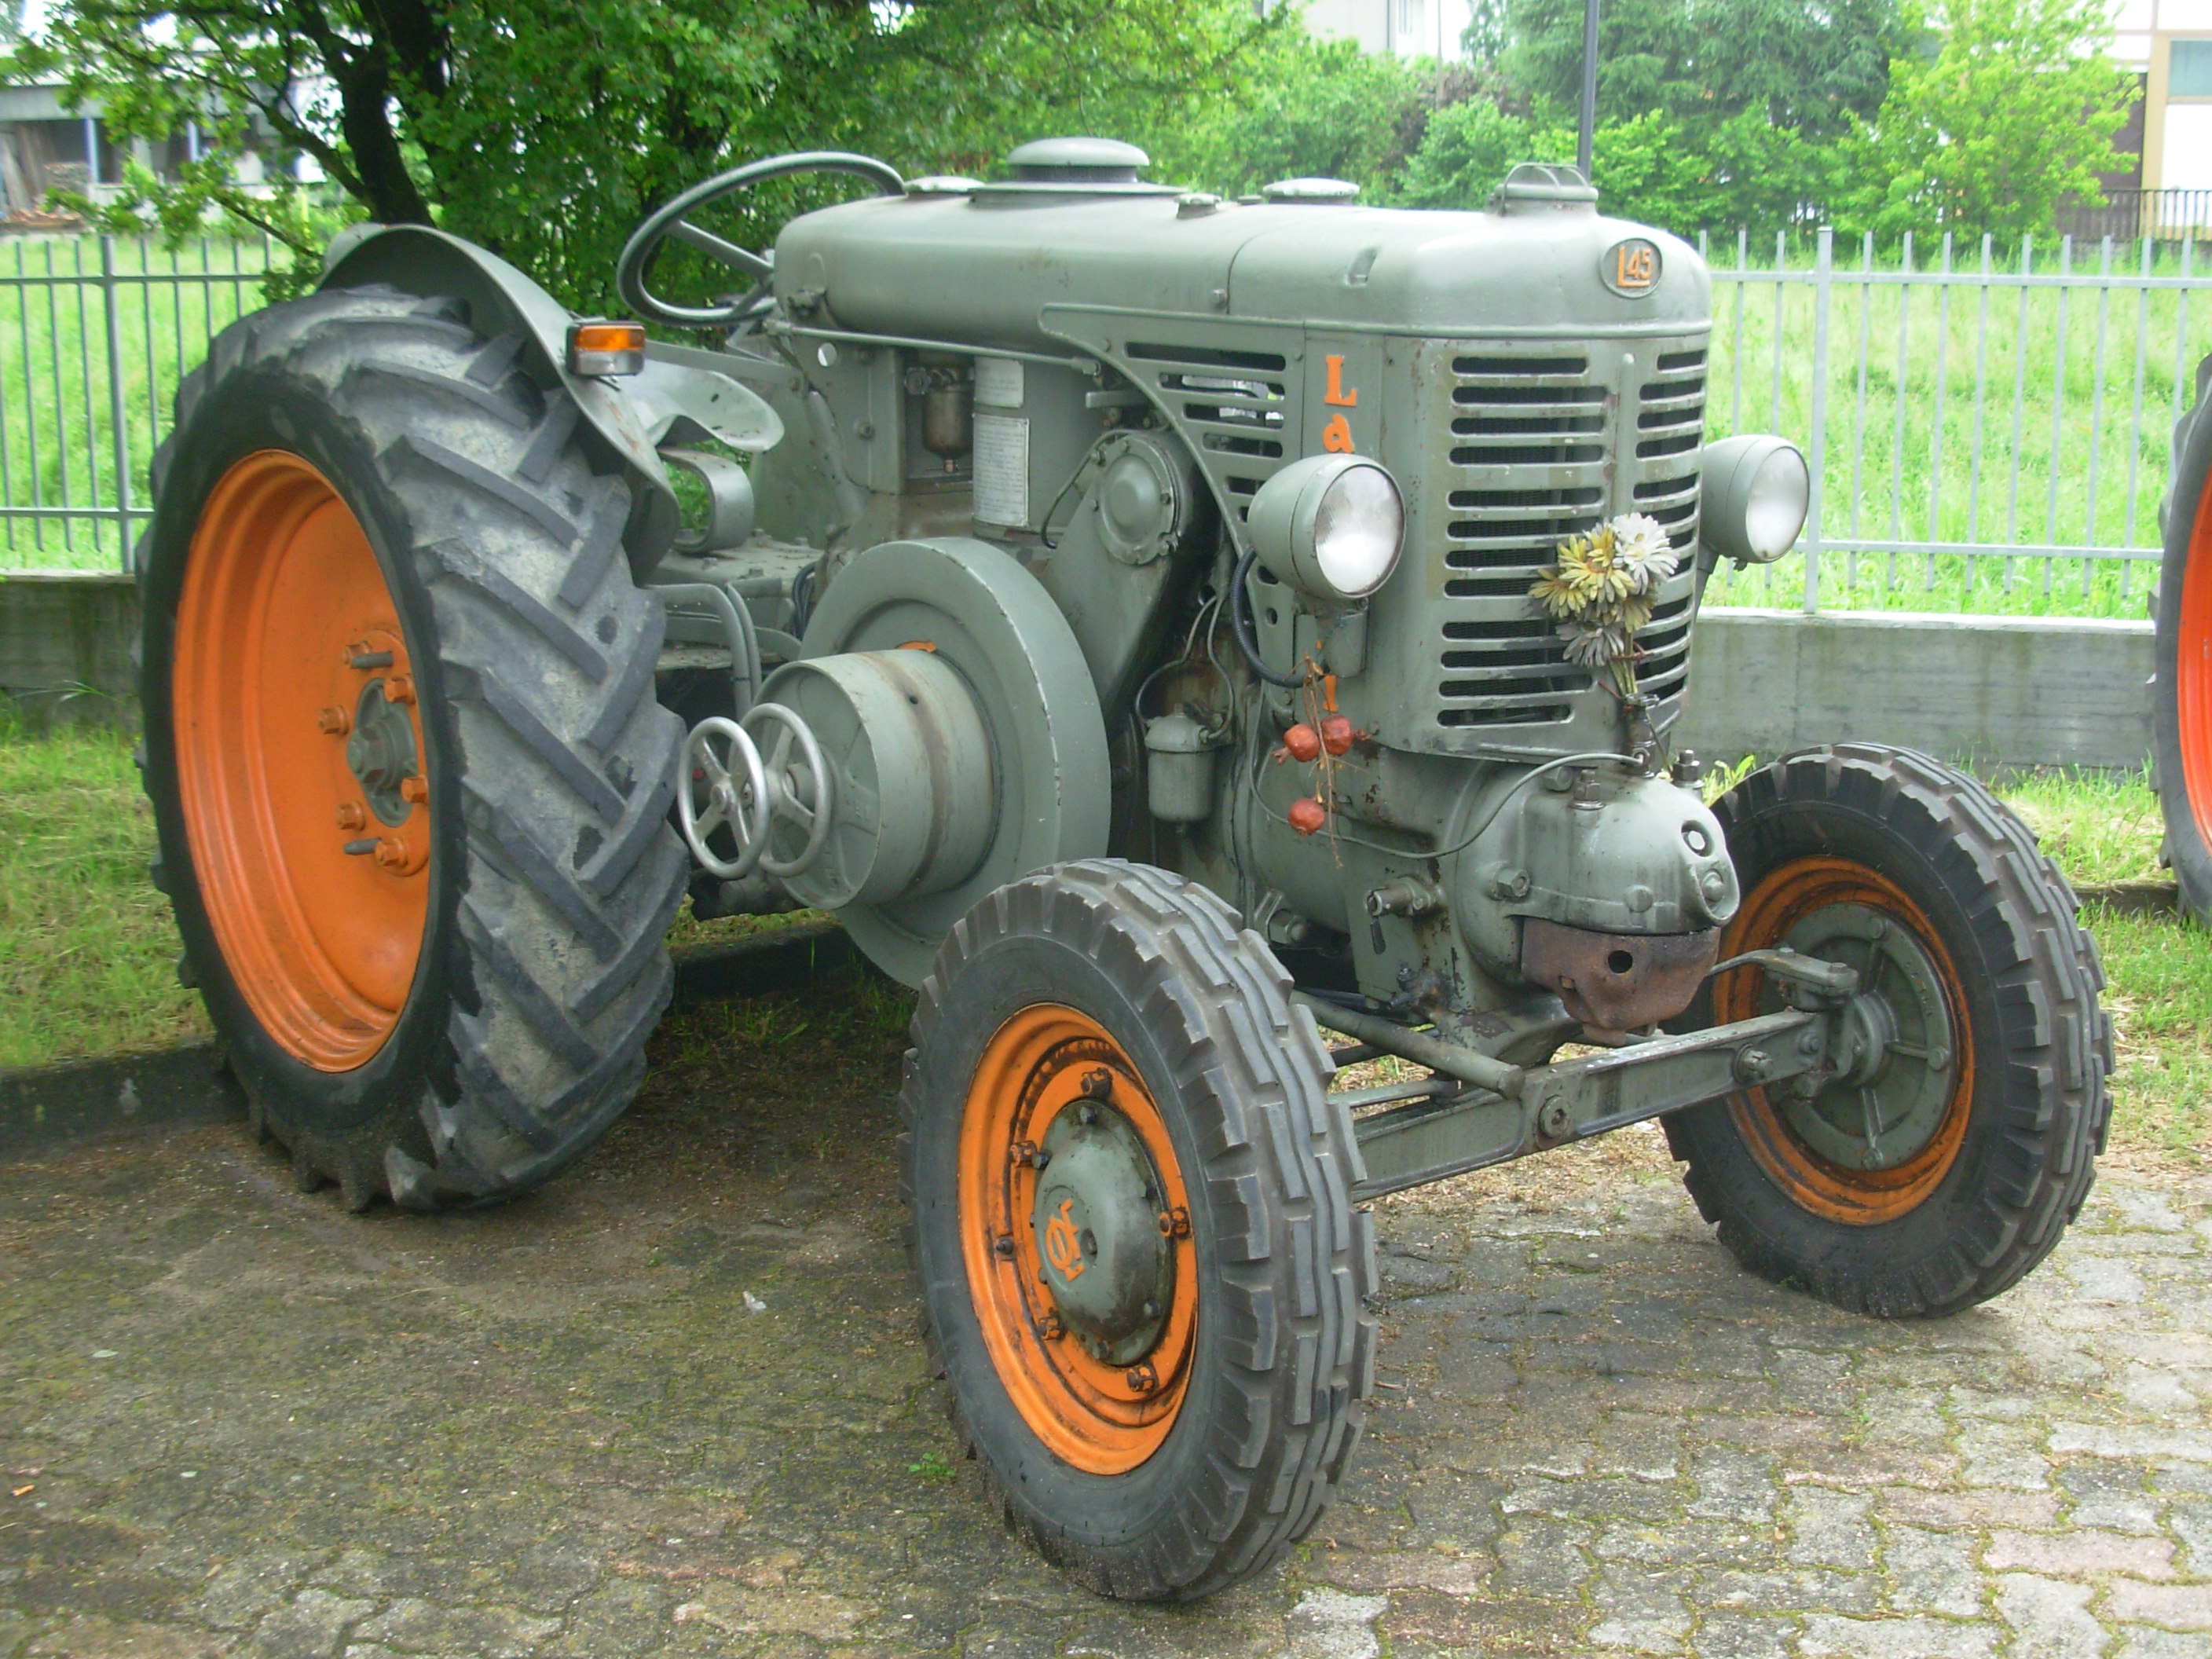 S tractor. Трактор Landini l45. ДТ-20 трактор. Landini трактор 125. Дизельный двигатель ДТ 20.